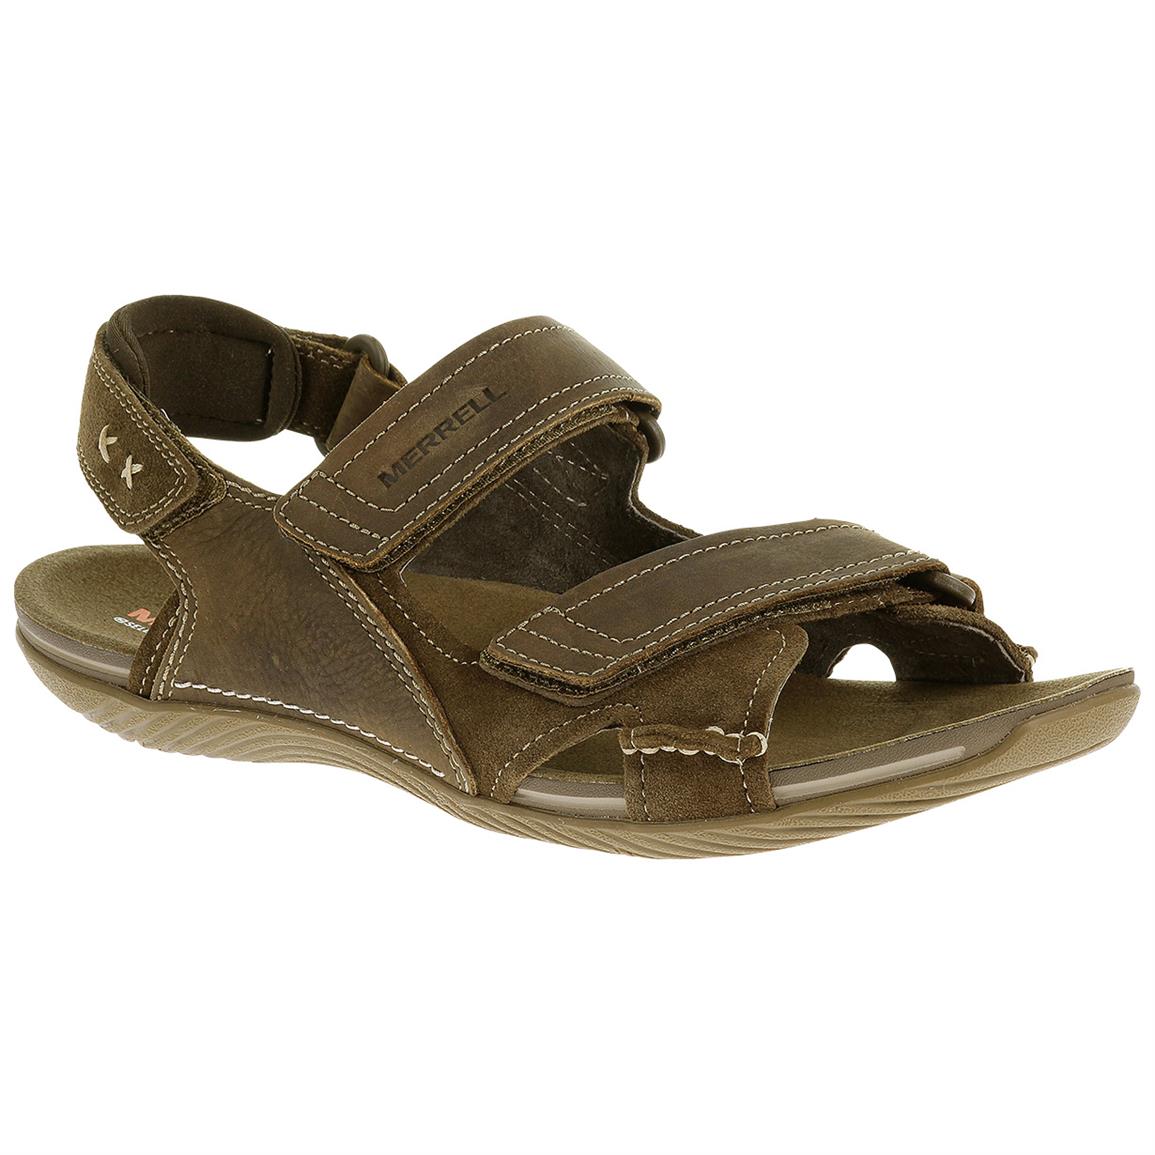 Merrell Bask Duo Sandals - 643870, Sandals & Flip Flops at Sportsman's ...